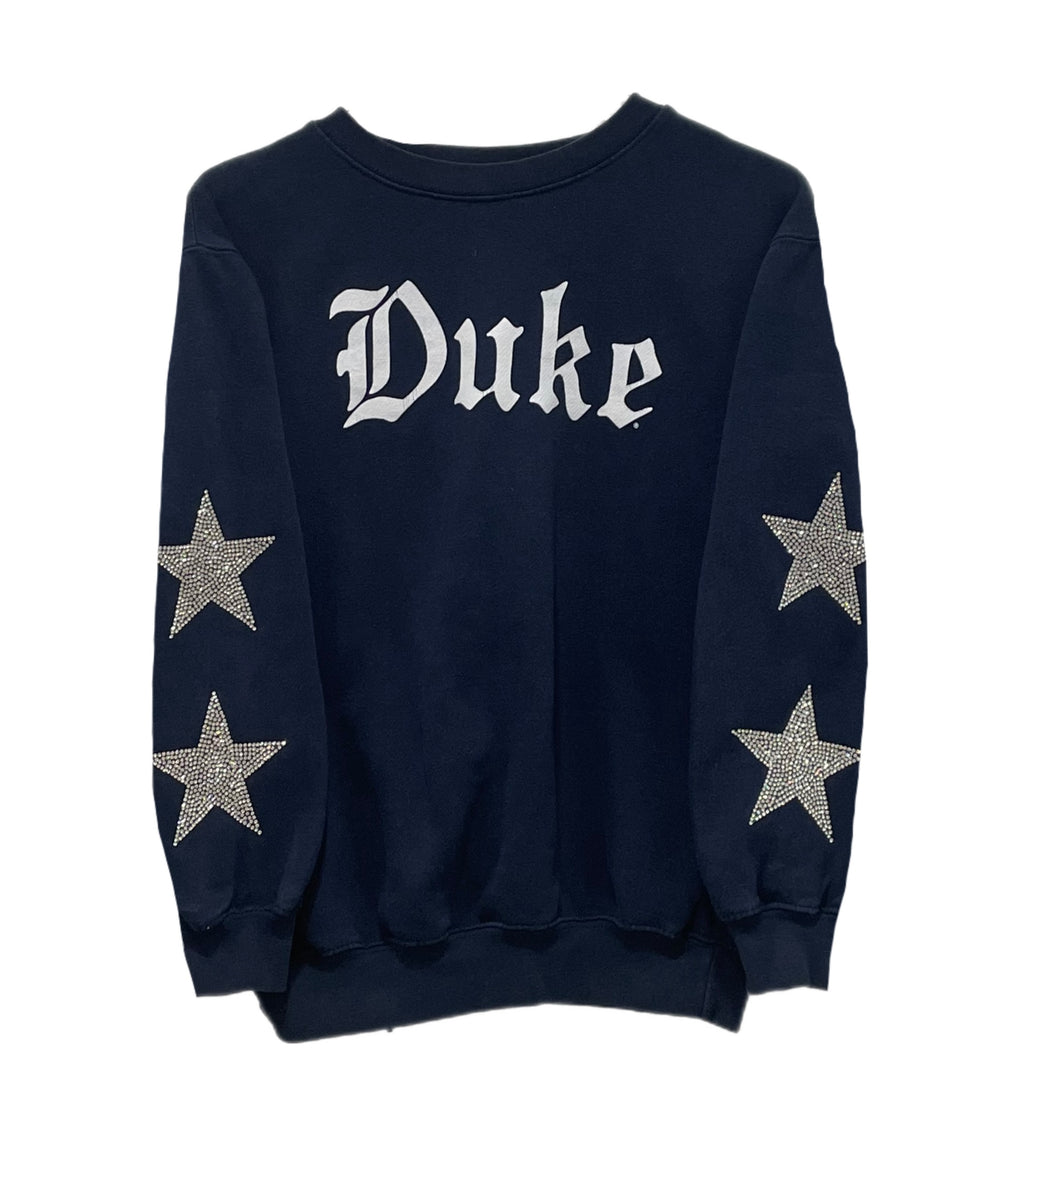 Duke Univeristy, One of a KIND Vintage Sweatshirt with Crystal Star Design